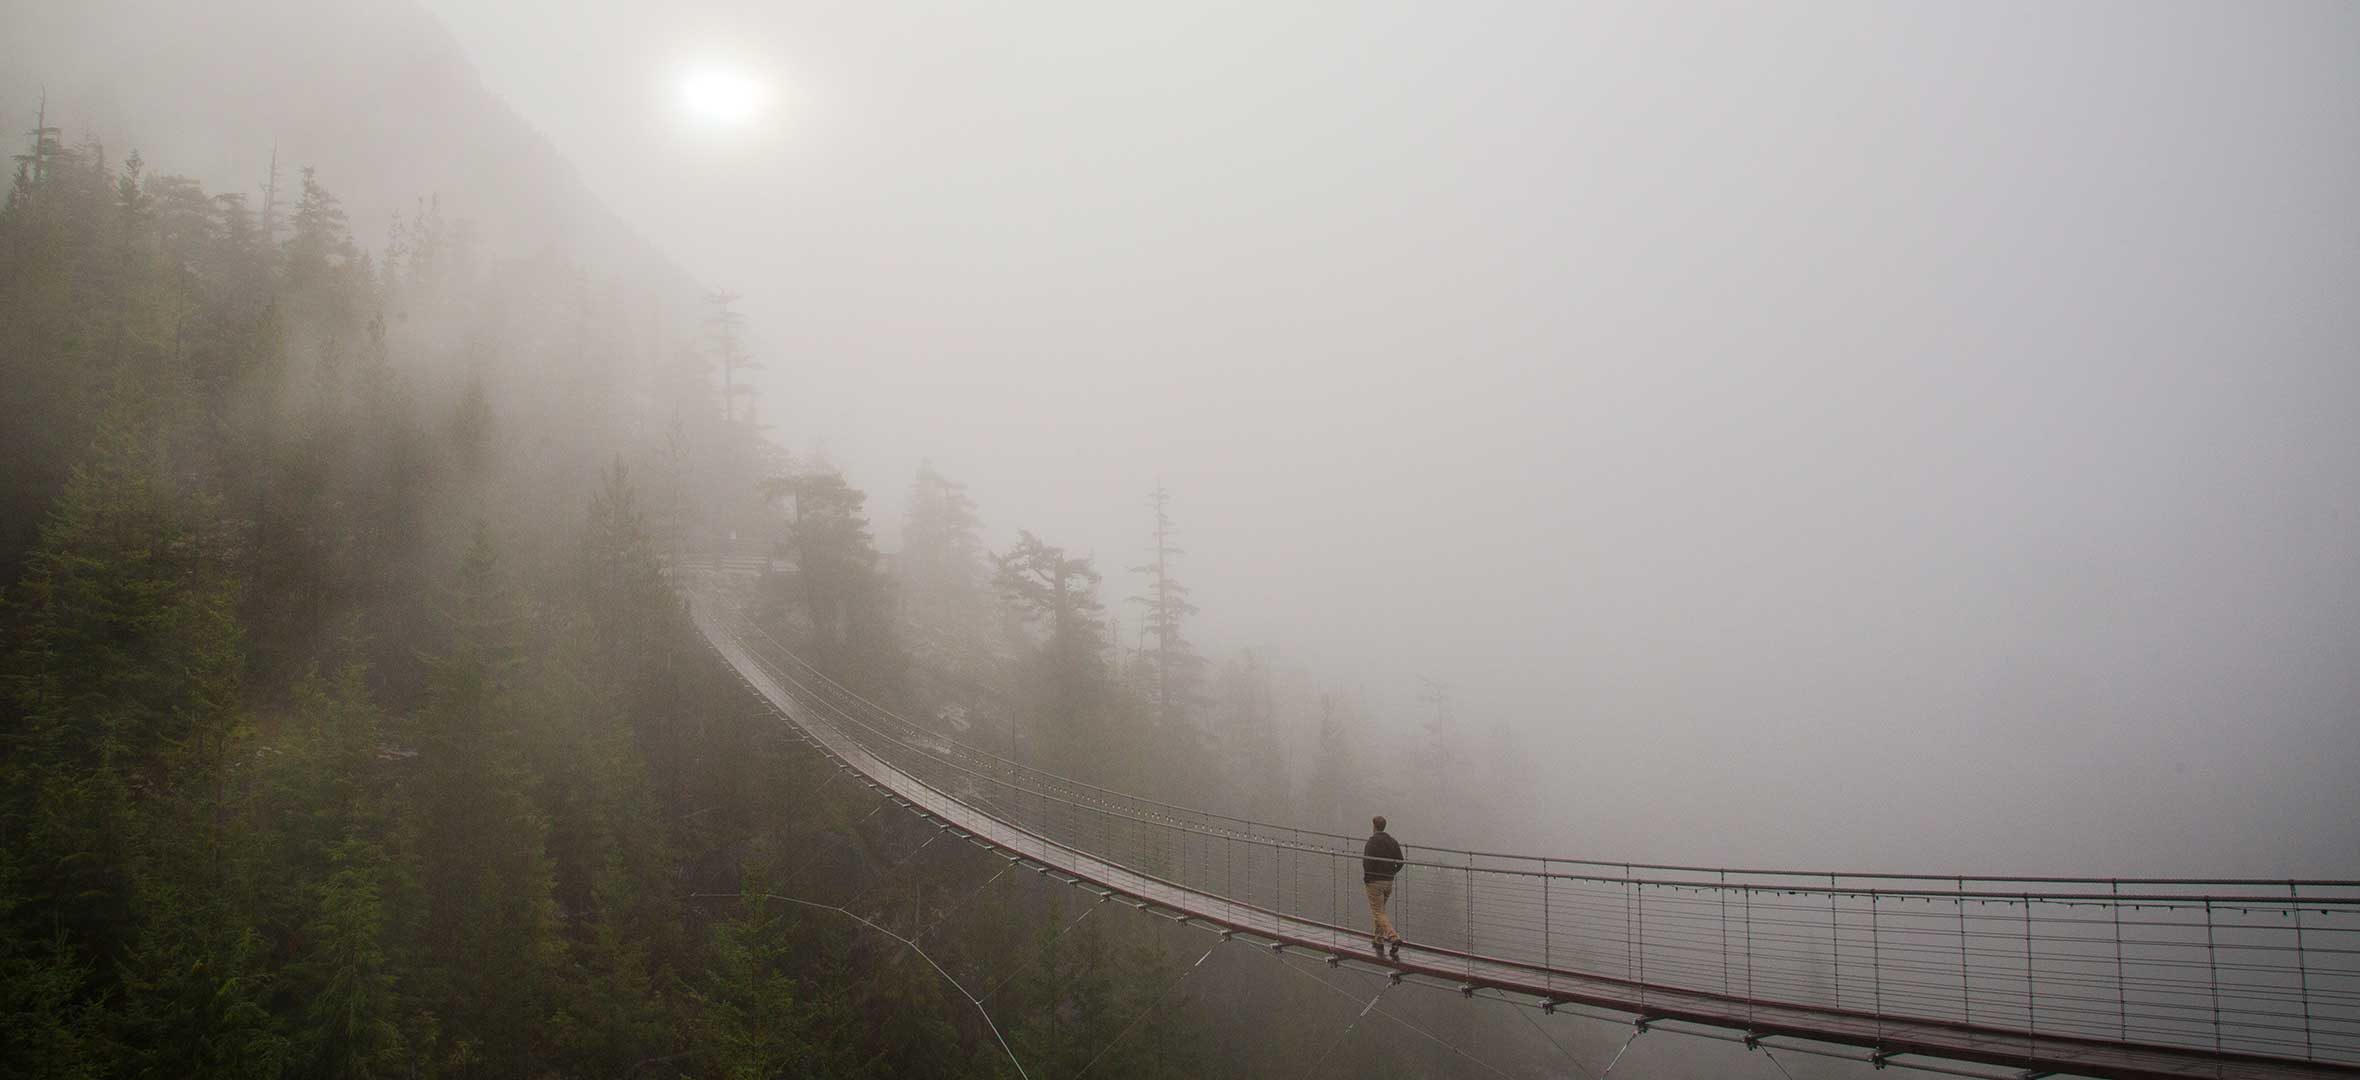 Trevor Dunn walks on a suspension bridge